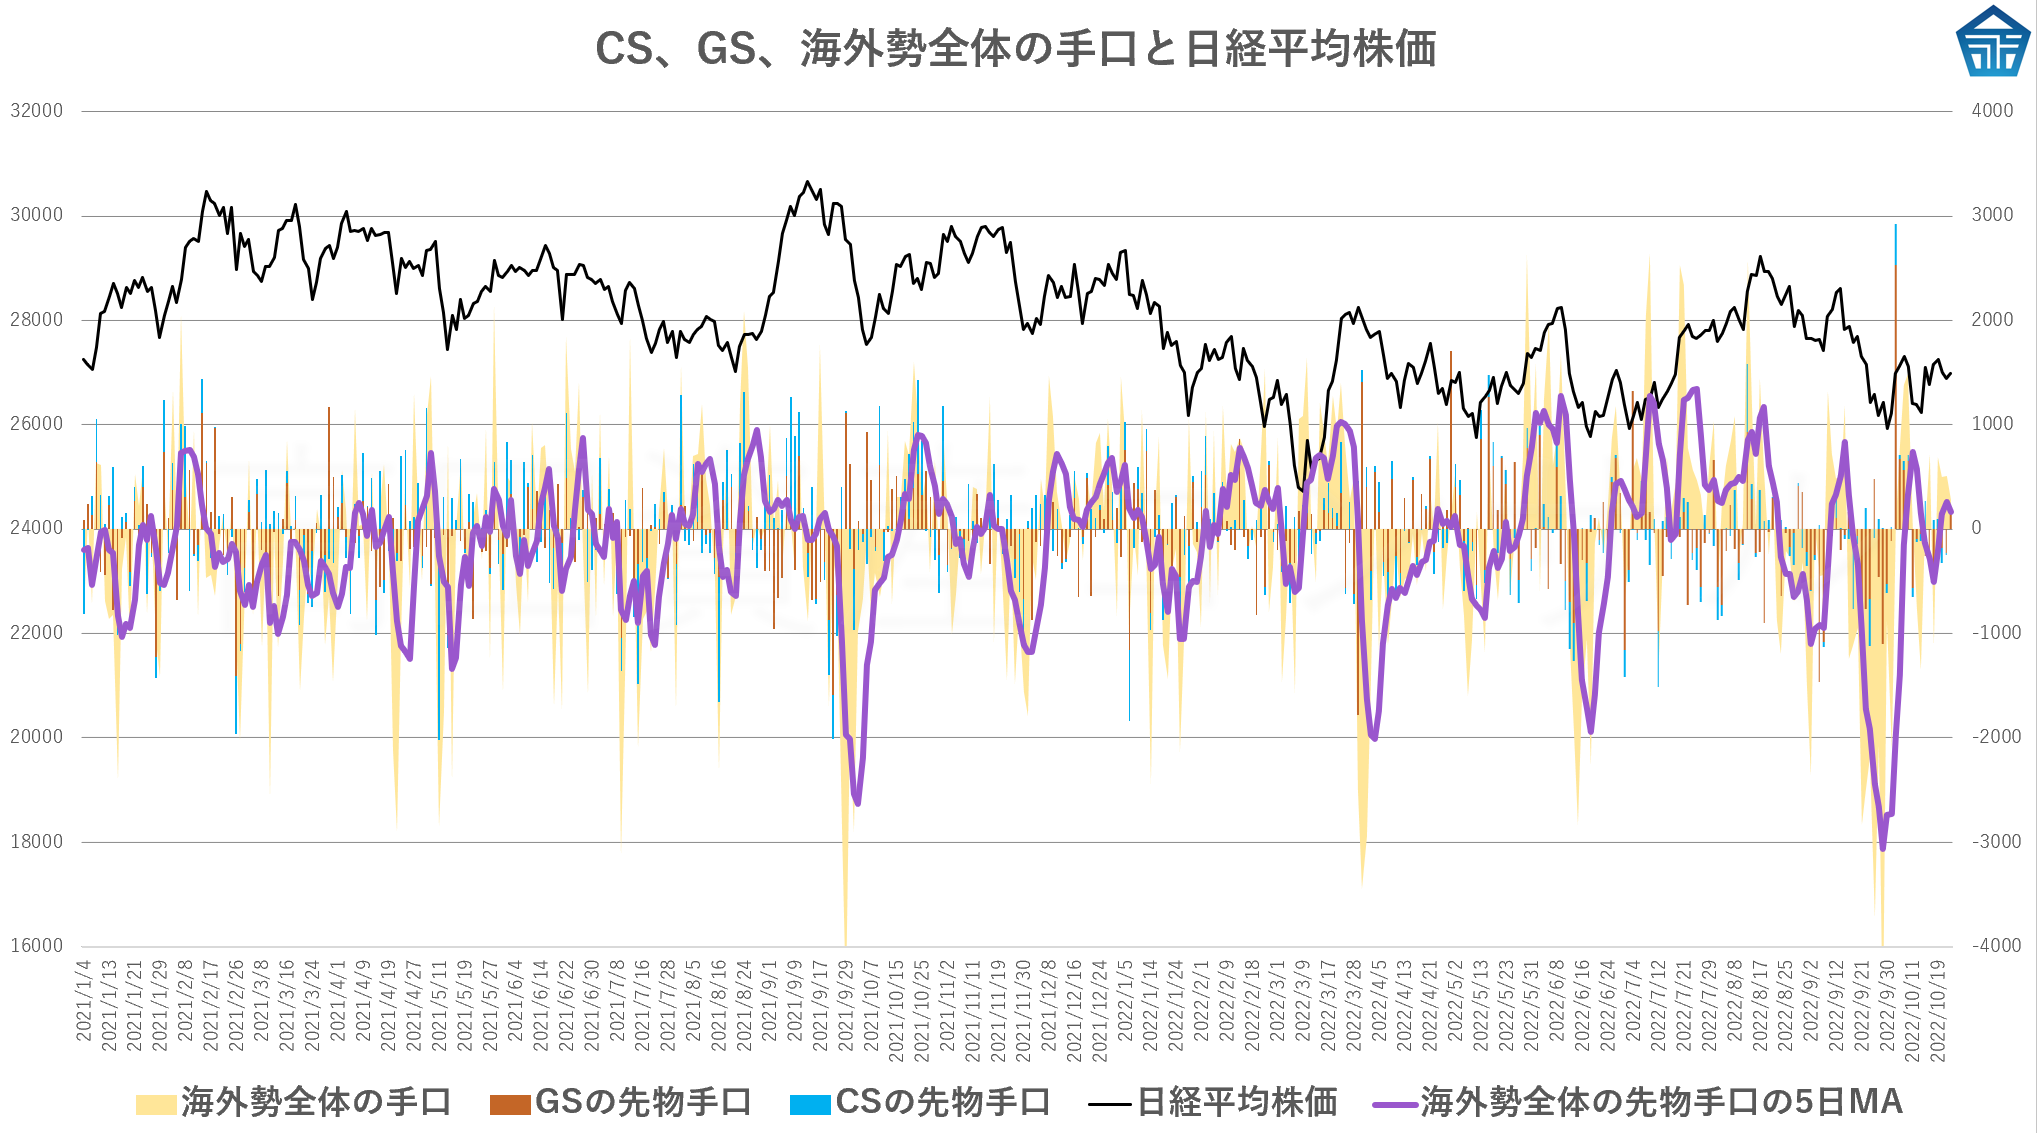 CS、GS、海外勢全体の手口と日経平均株価20221024hihioih778